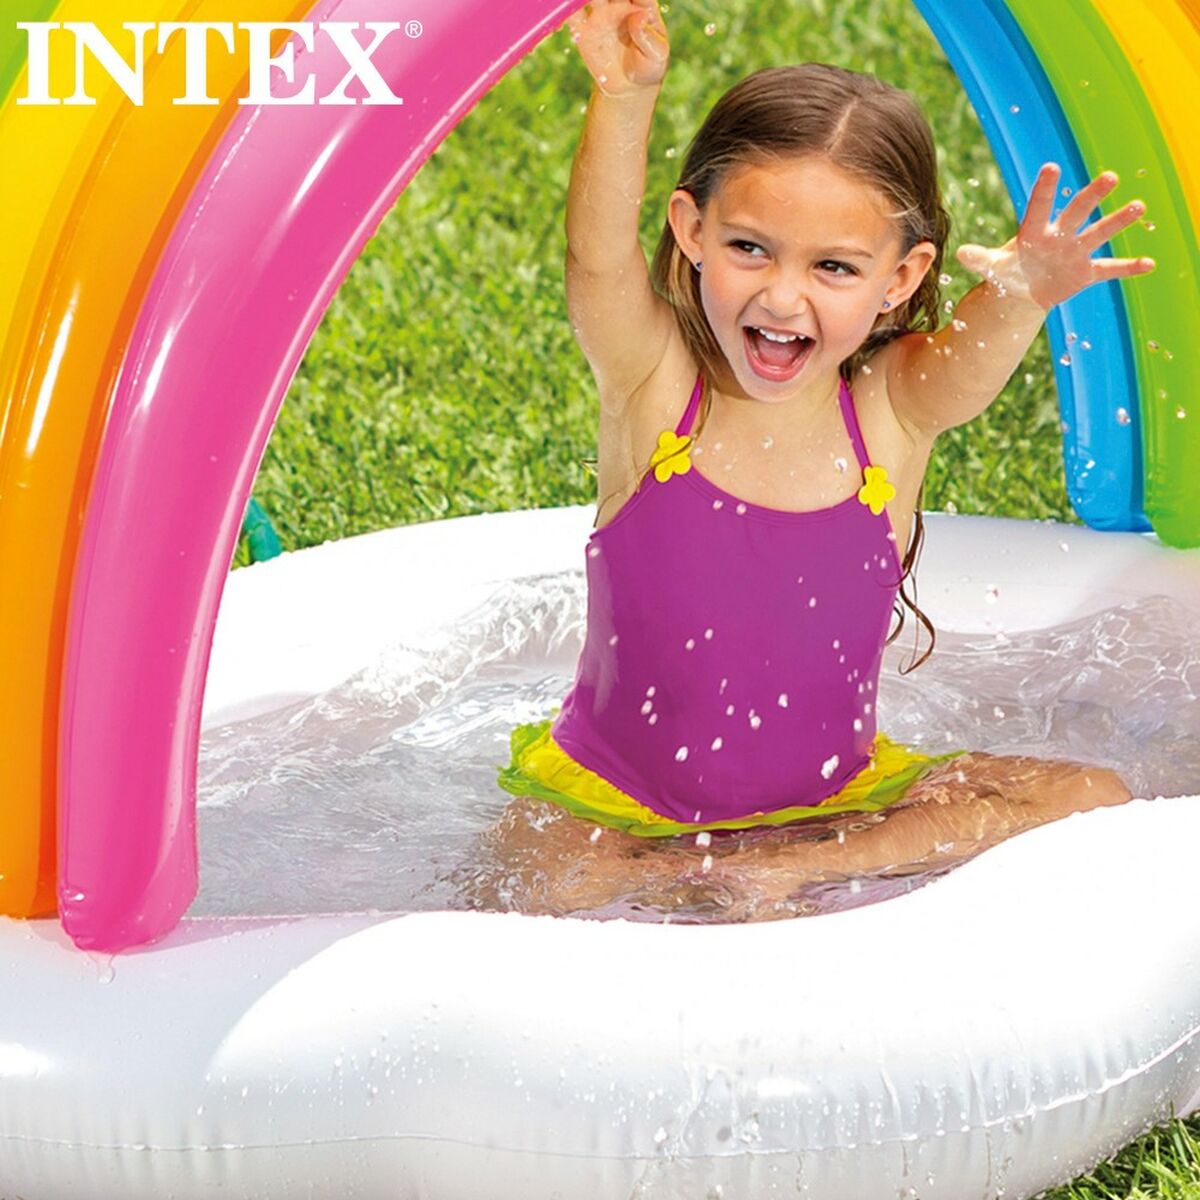 Inflatable Paddling Pool for Children Intex         Rainbow 84 L 119 x 84 x 94 cm  